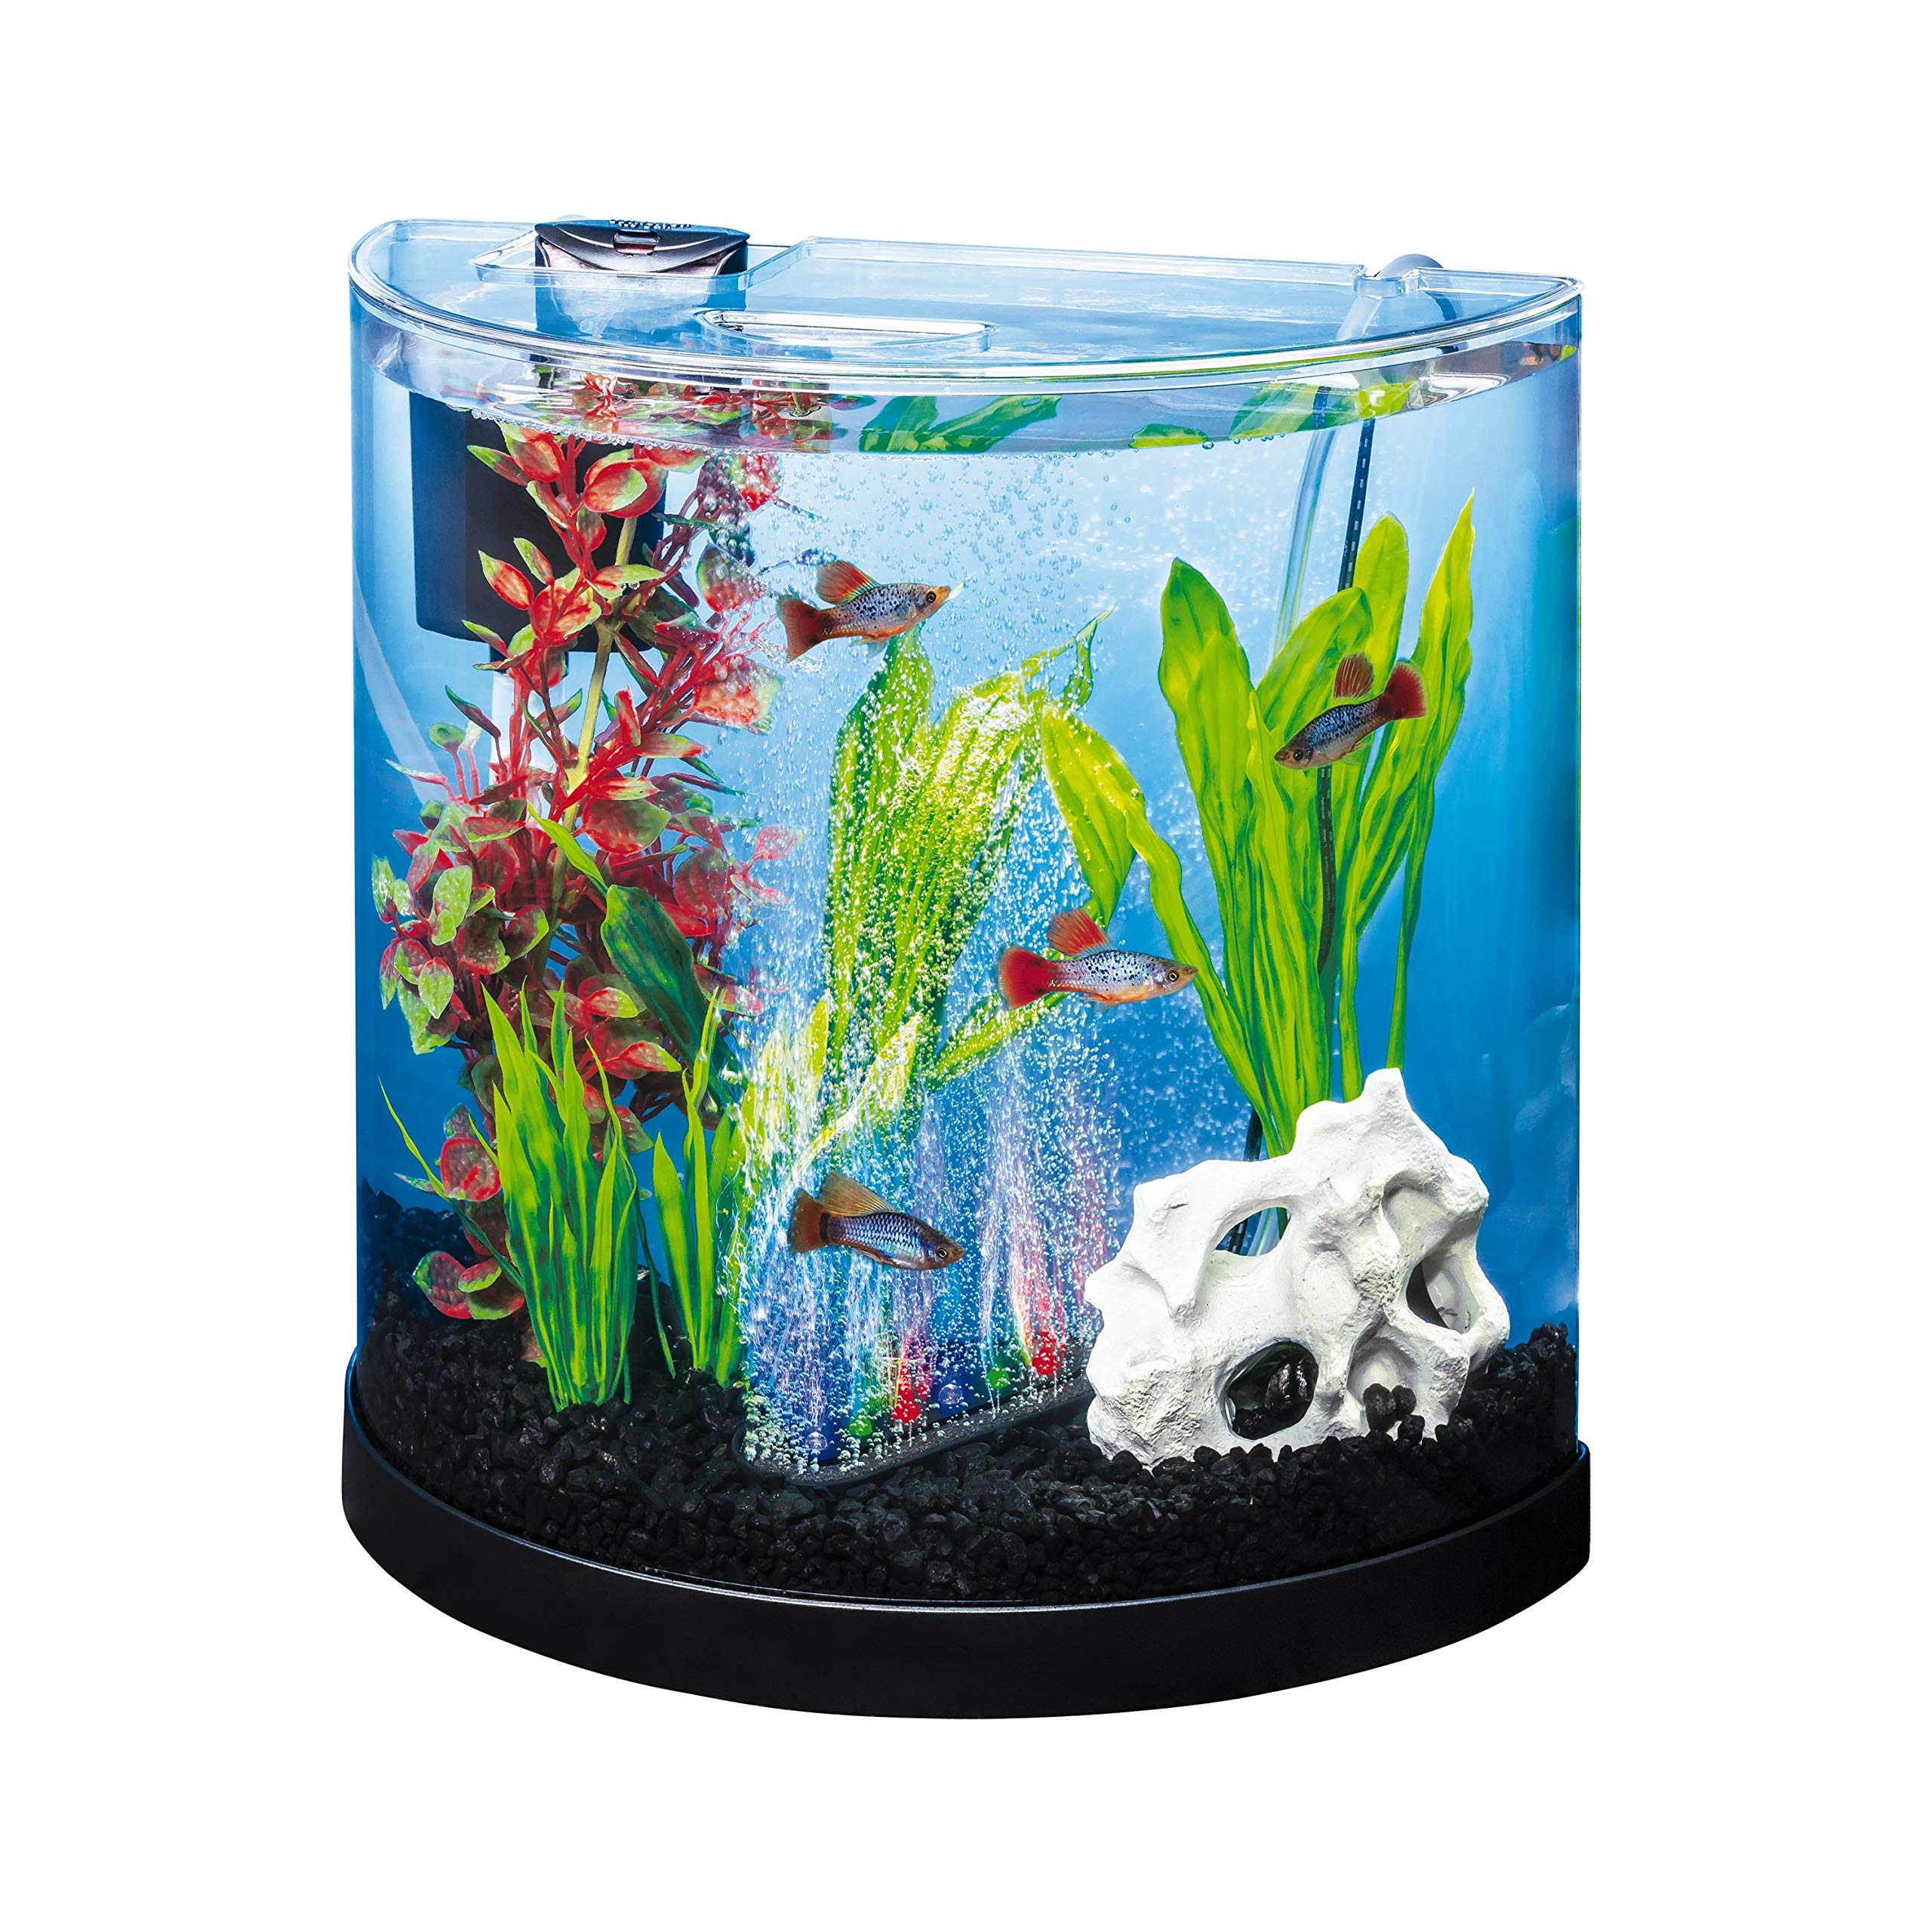 Tetra ColorFusion Starter aquarium Kit 3 Gallons, Half-Moon Shape,